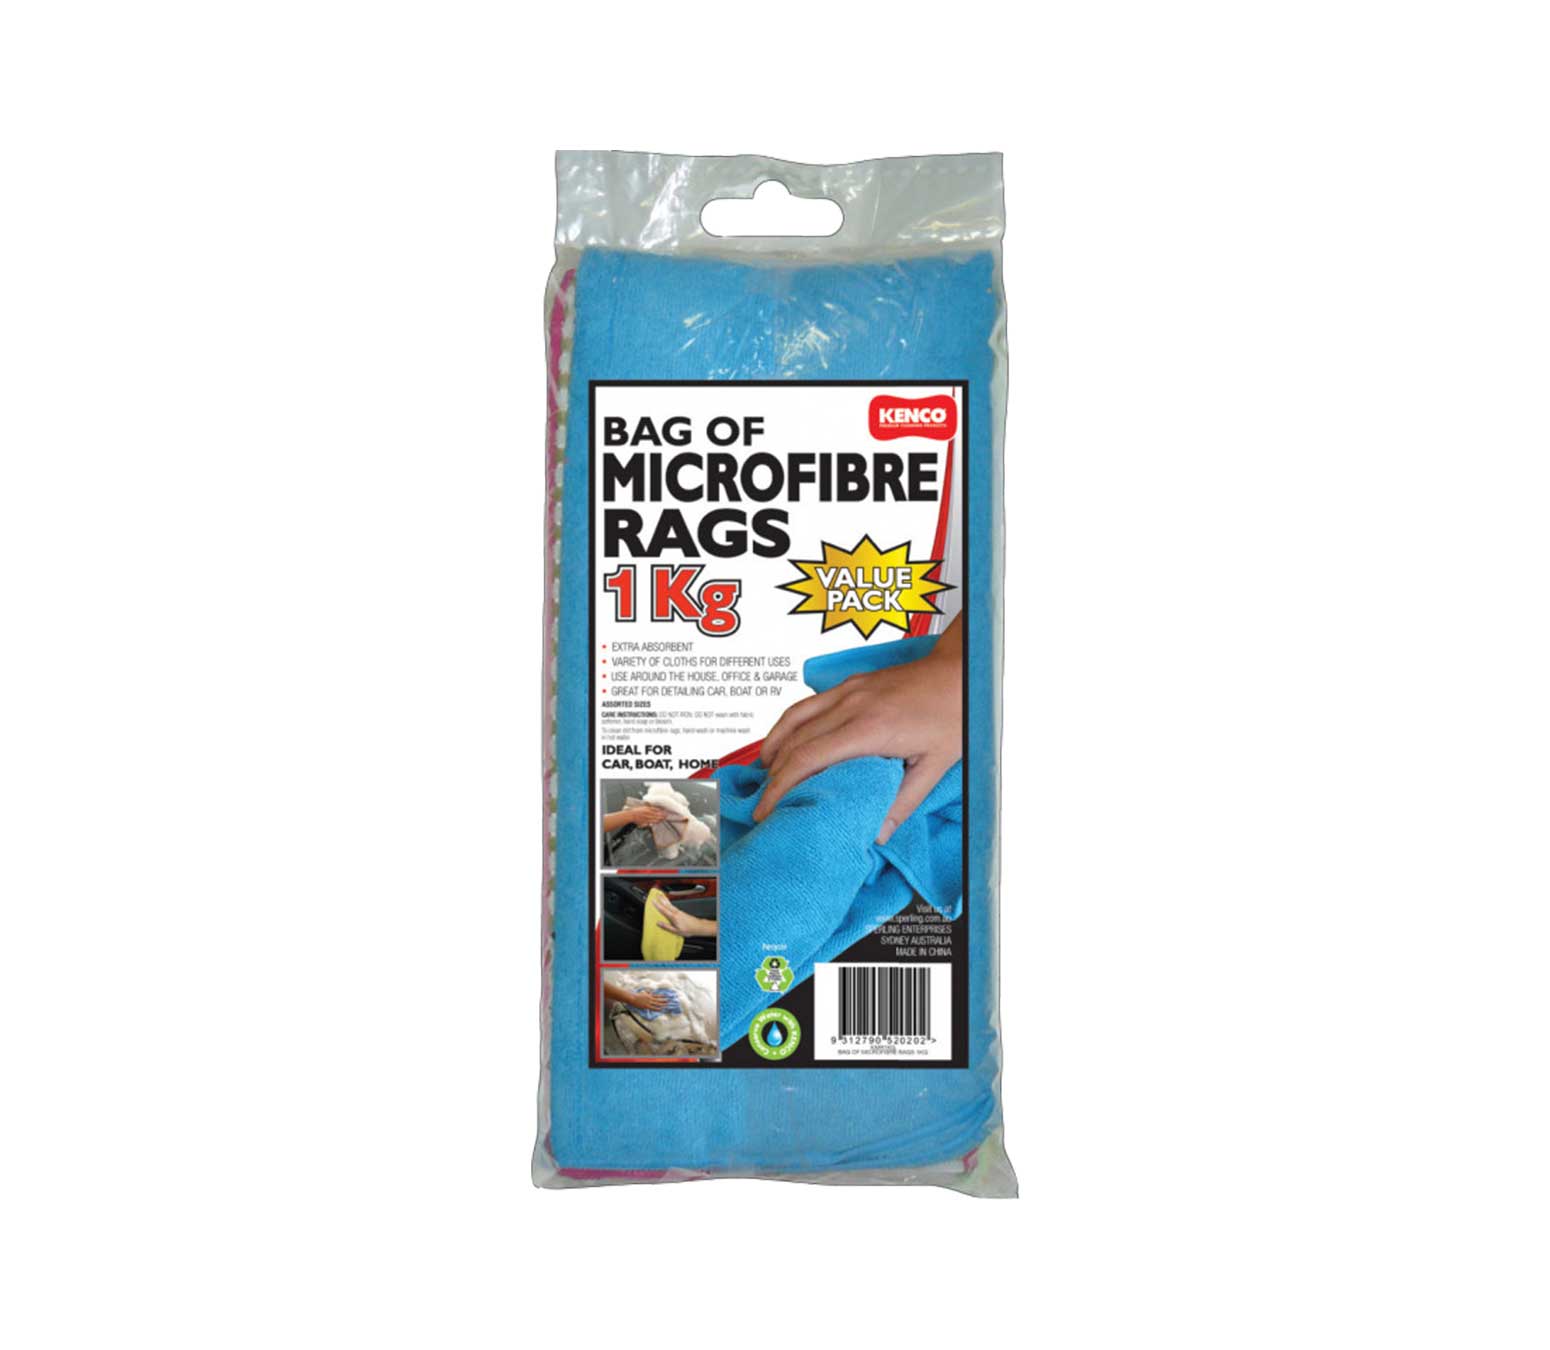 Bag of Microfibre Rags 1Kg Value Pack